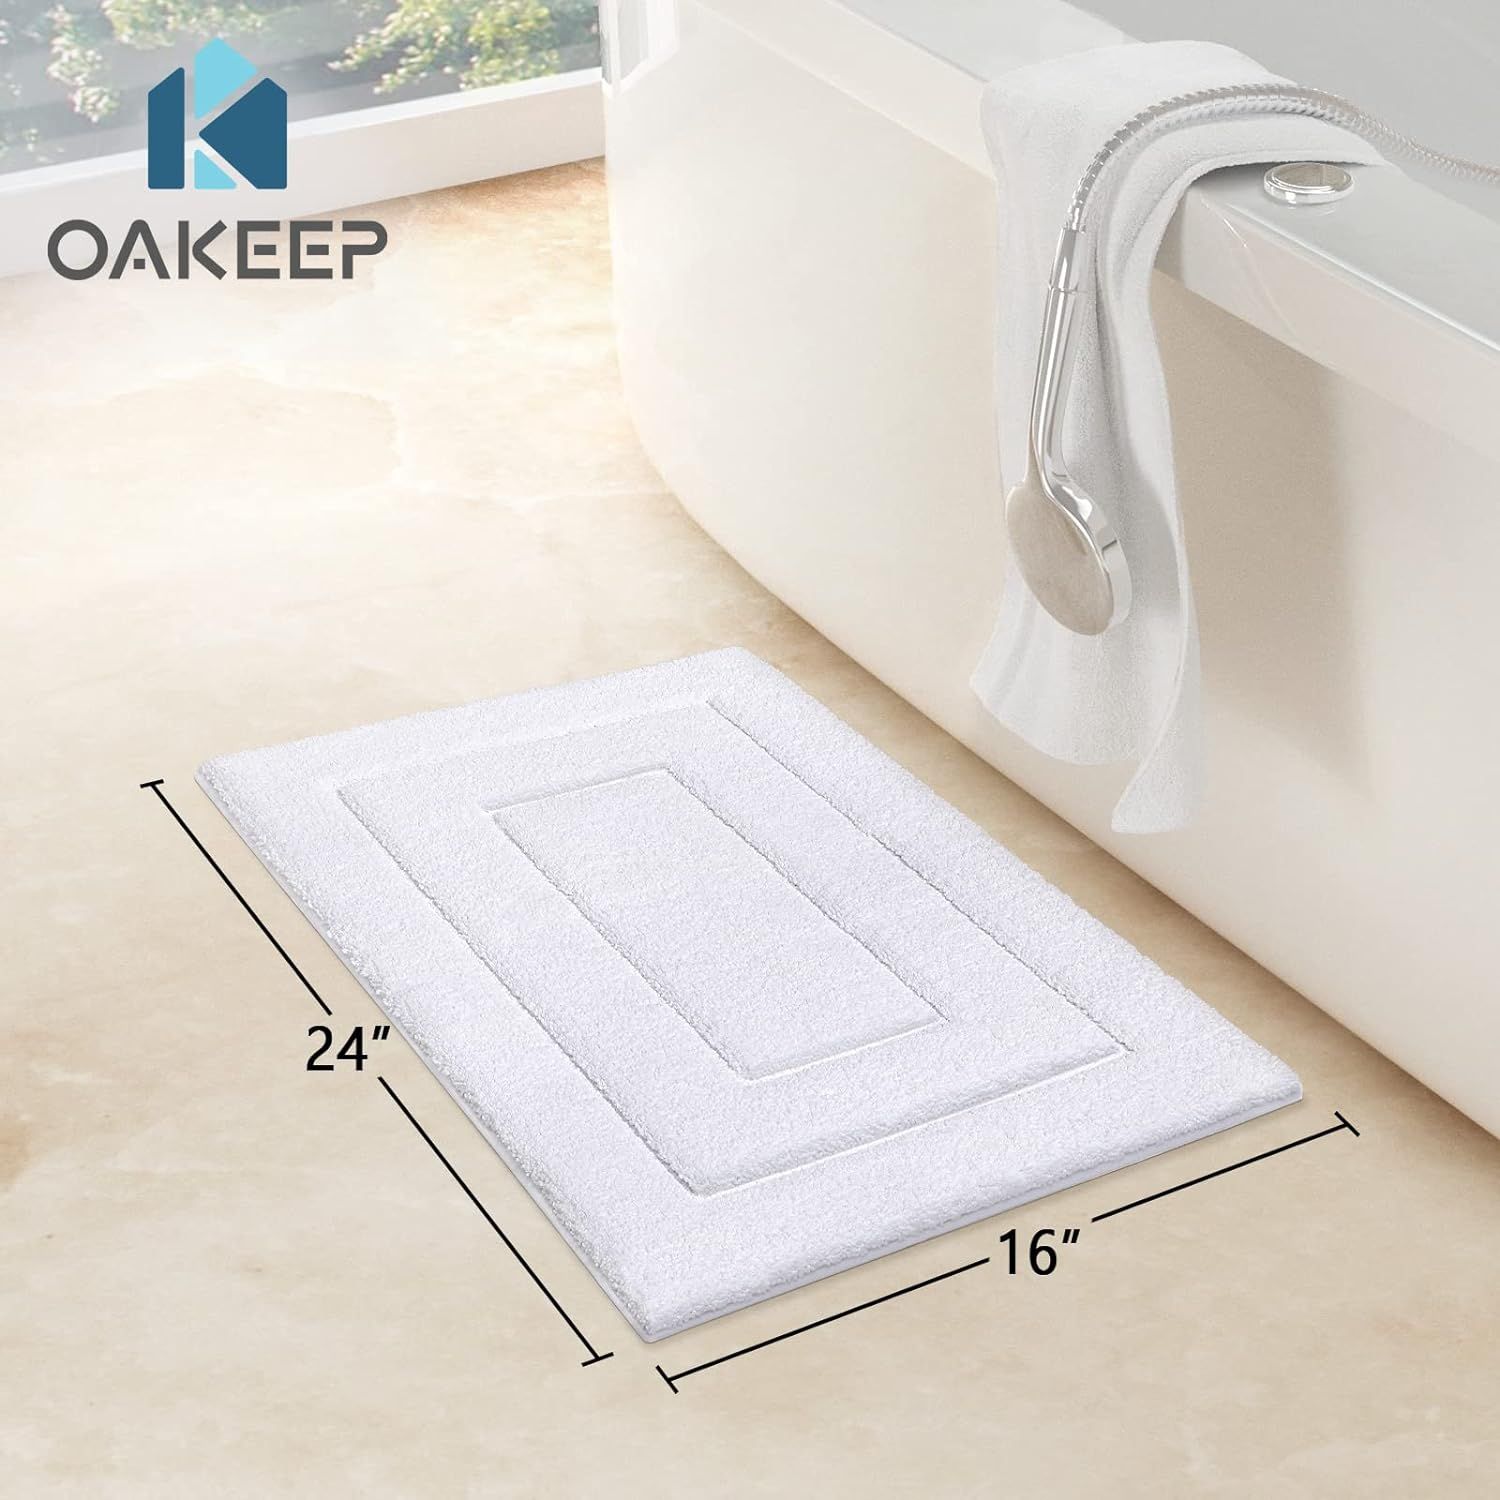 Oakeep Bathroom Rug Non-Slip Bath mat, Extra Soft Absorbent Bath Rug, Machine Wash and Dry, Plush Ca | Amazon (US)